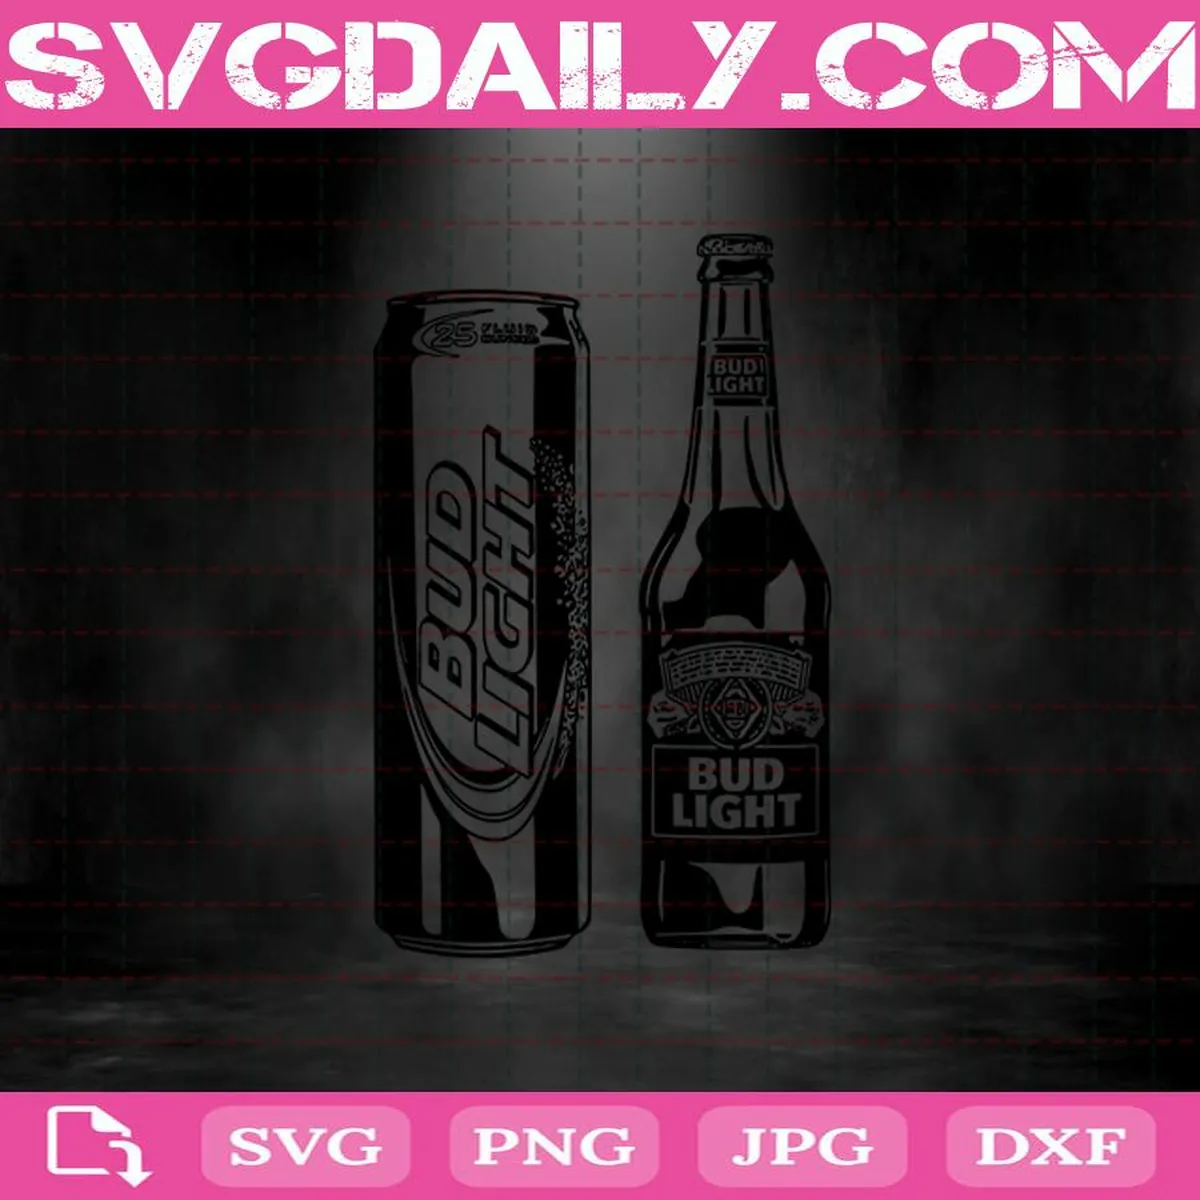 Bud Light Bottle And Can Alcohol Beer Svg, Bud Light Beer Svg, Bud Light Svg, Beer Svg, Alcohol Beer Svg